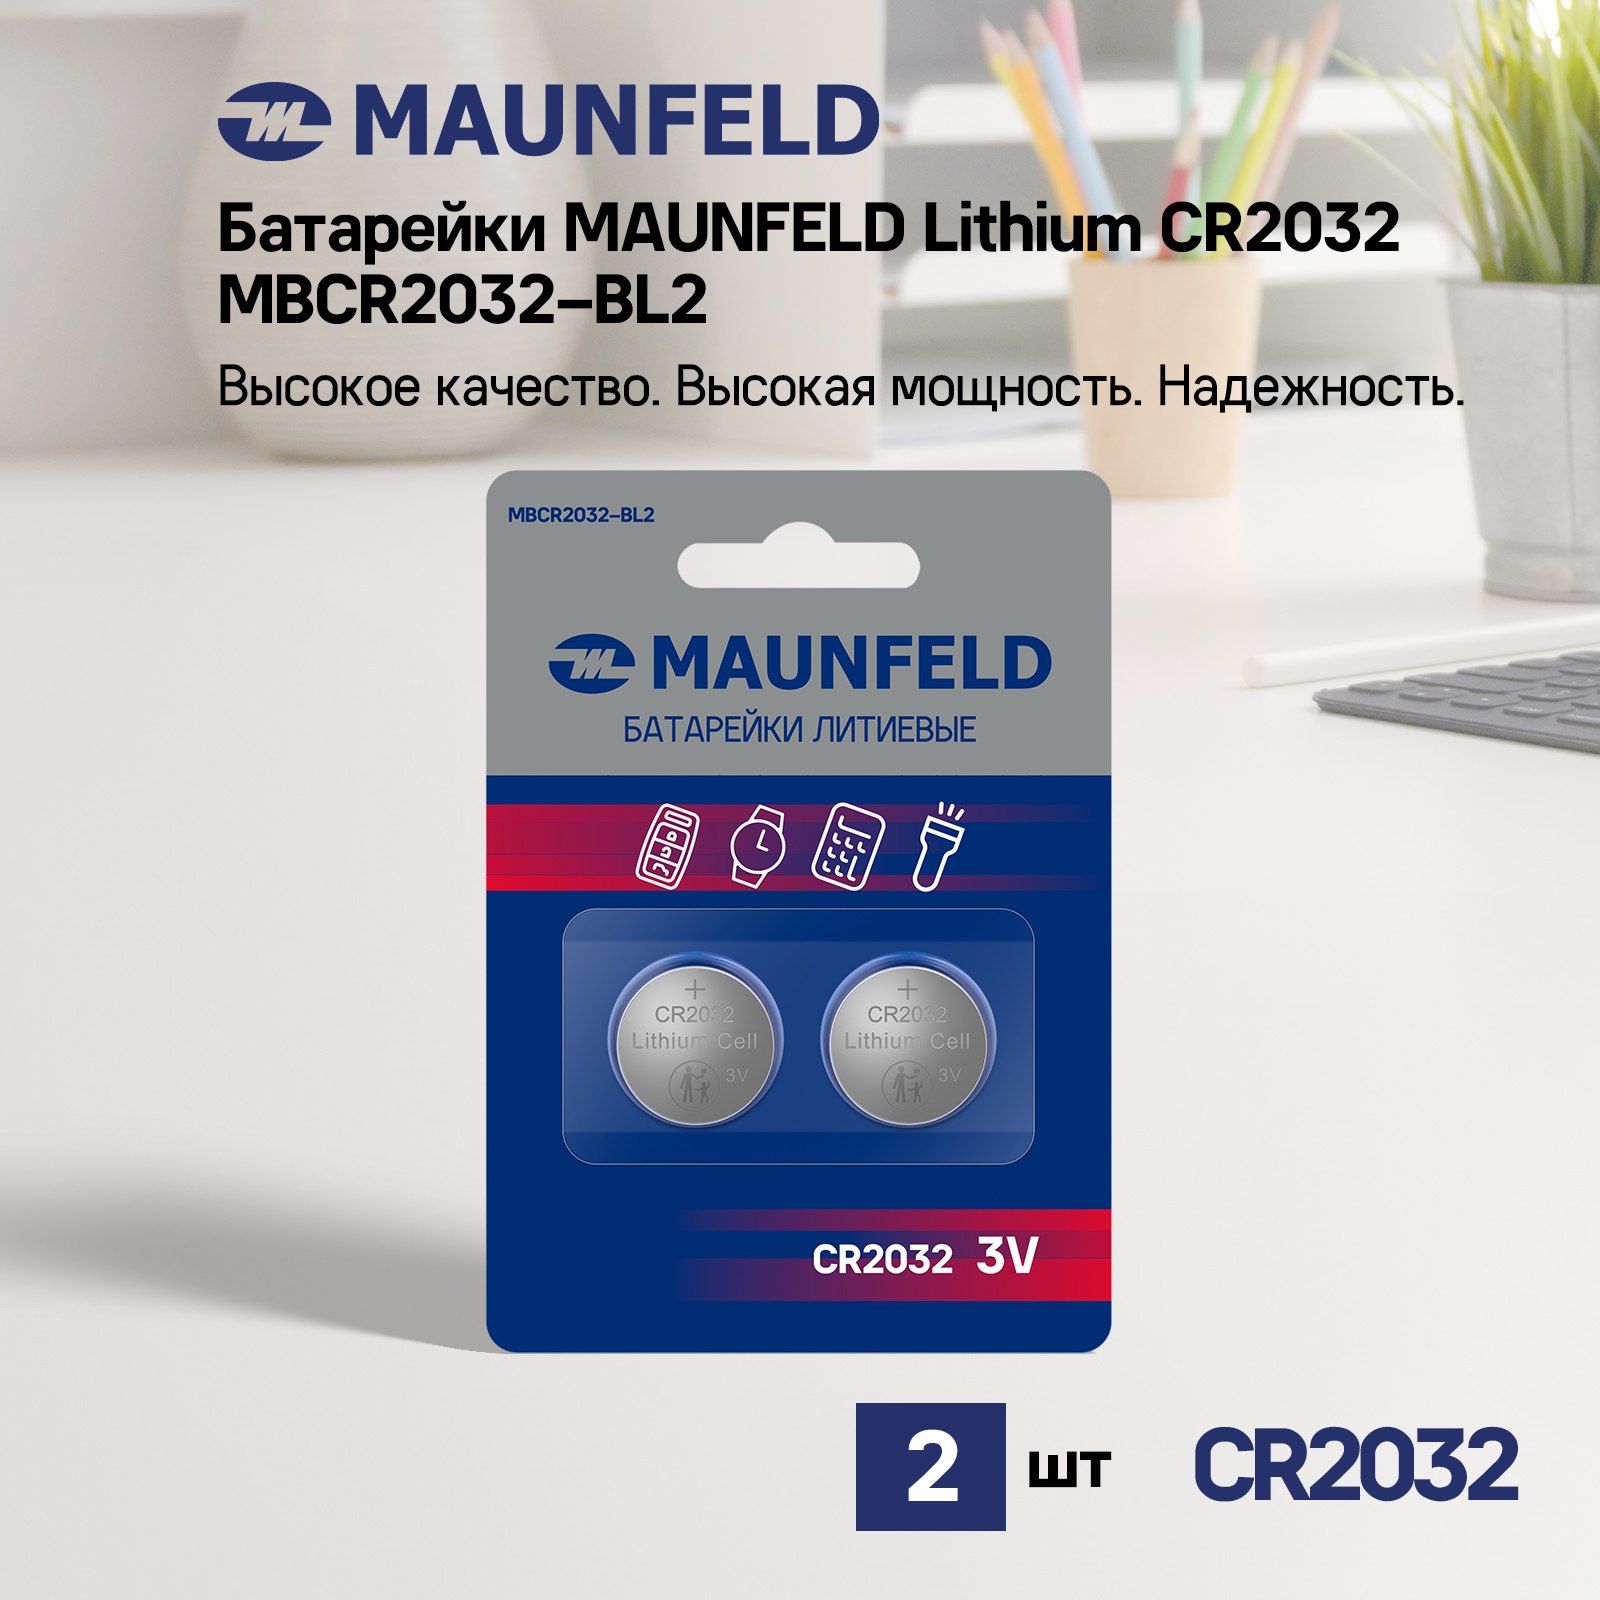 Батарейки MAUNFELD Lithium CR2032 MBCR2032-BL2, блистер 2 шт. мясорубка maunfeld mmg 3000s